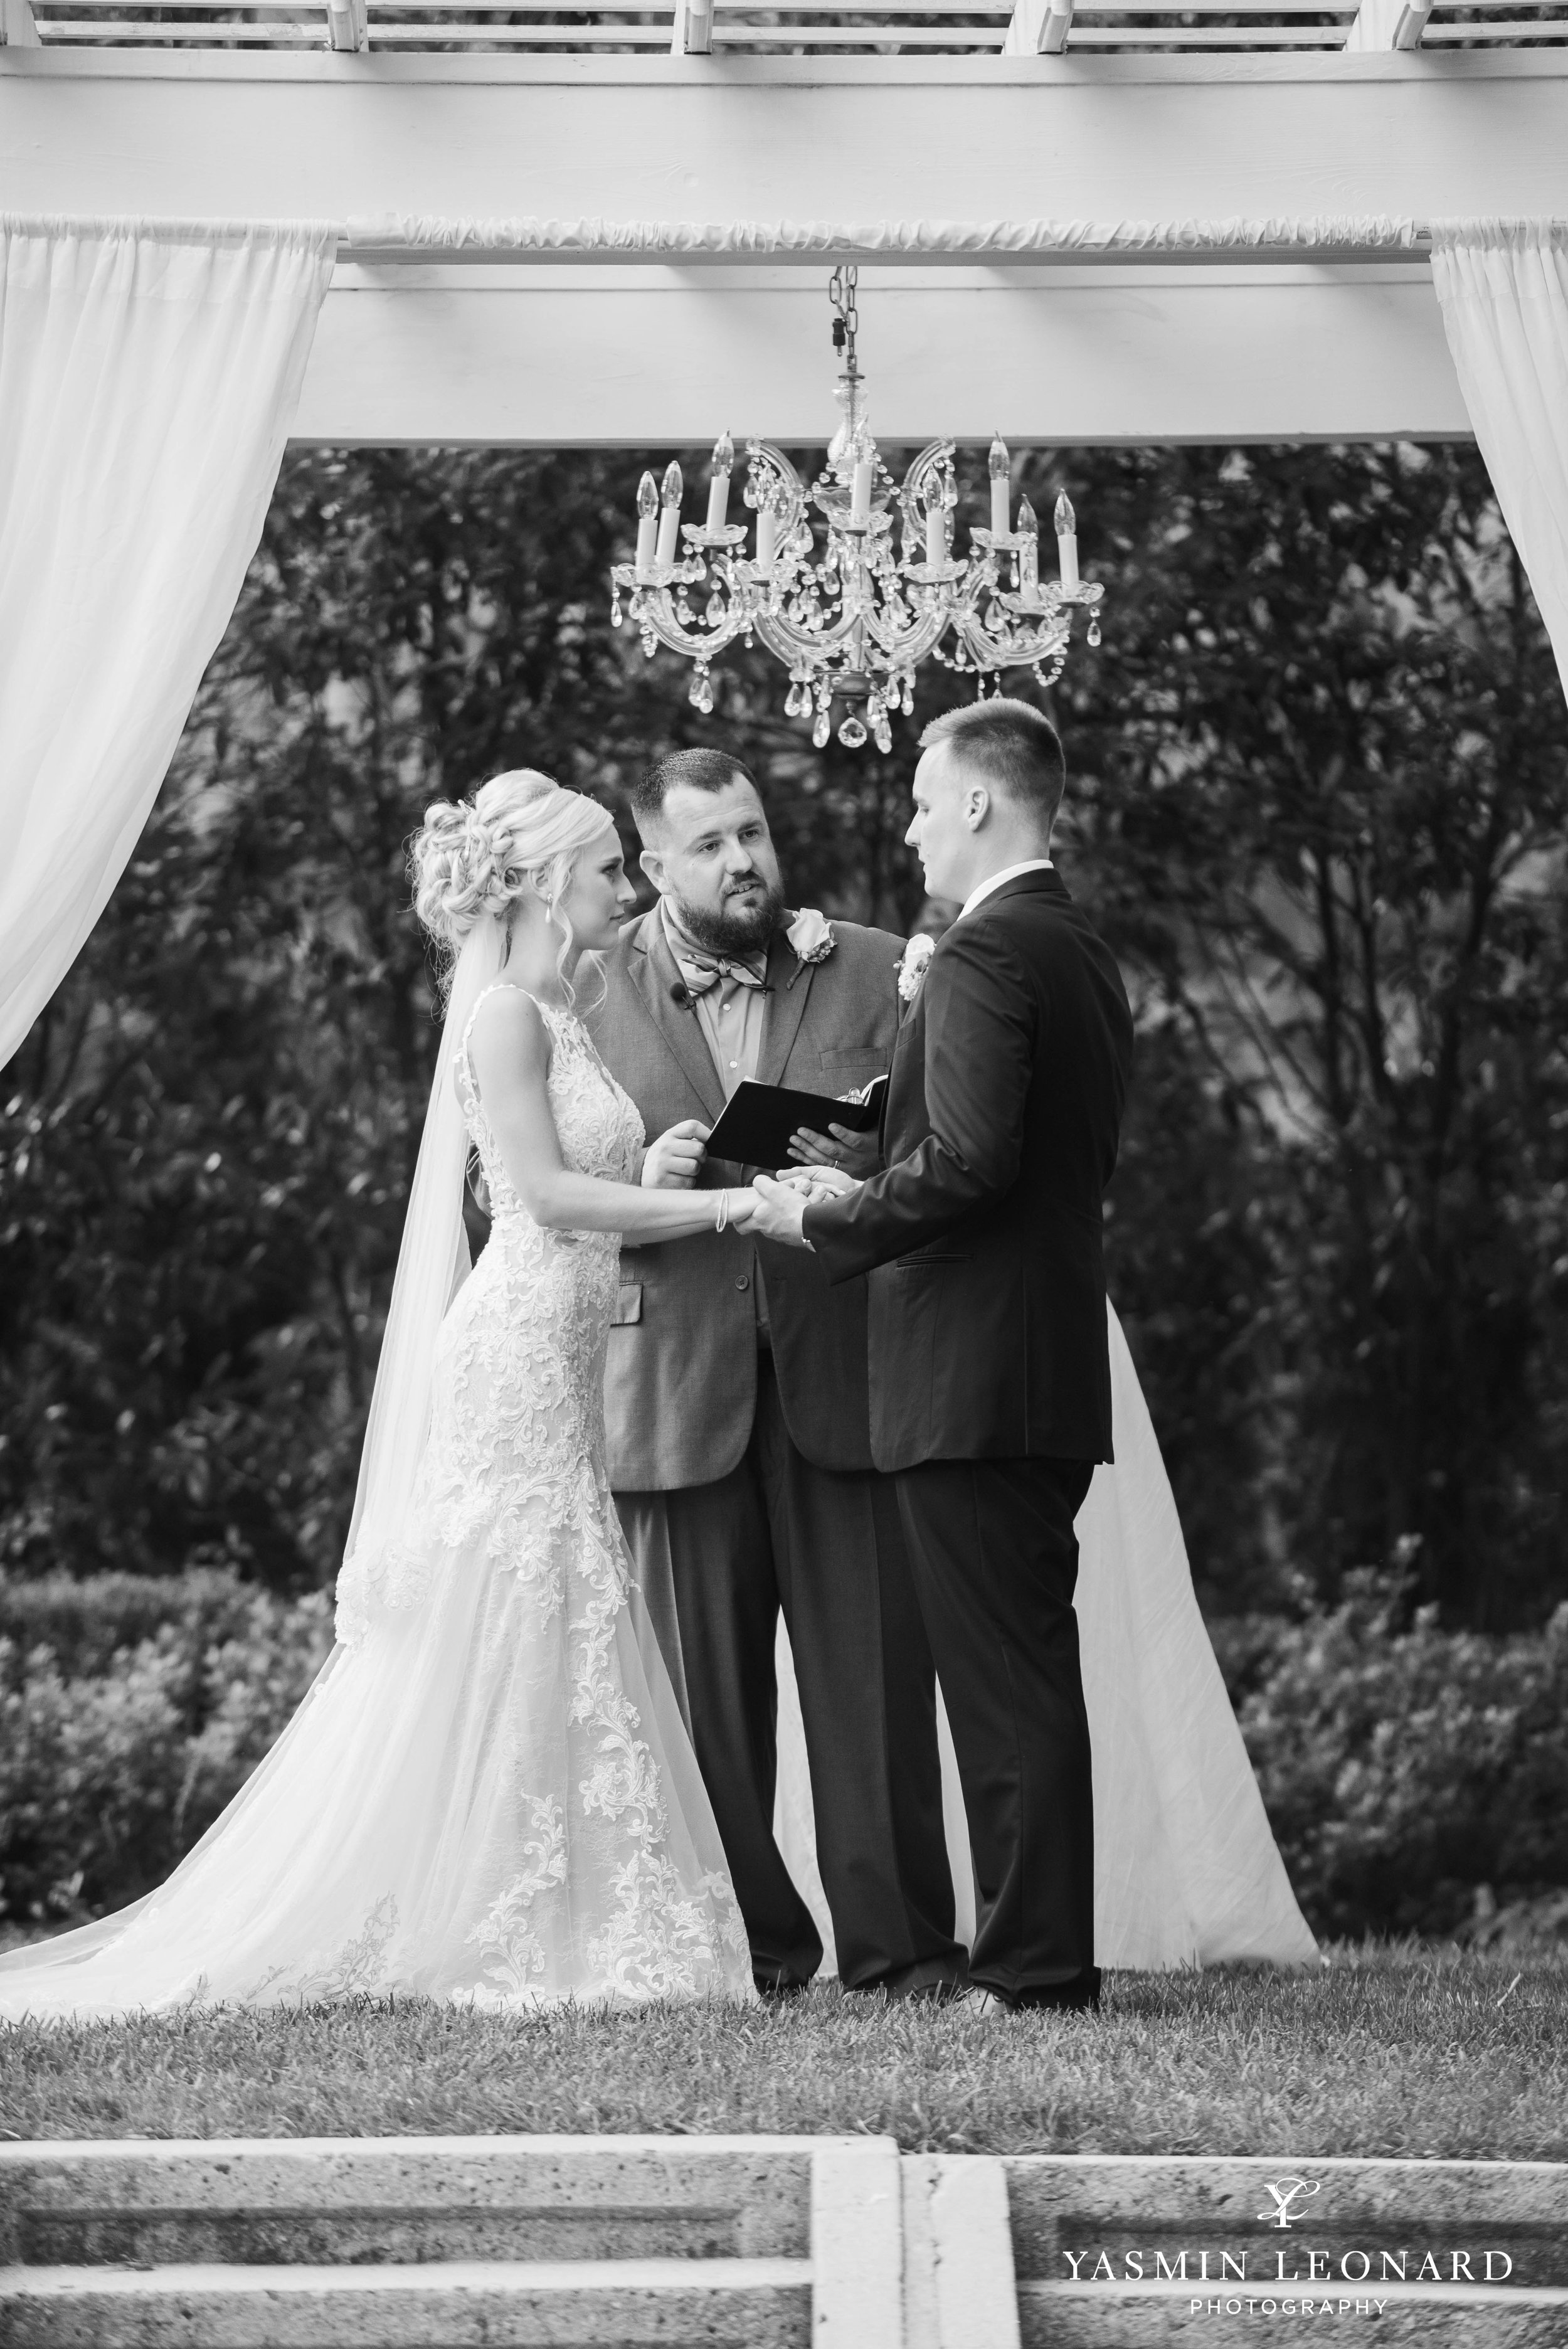 Separk Mansion - NC Weddings - Gastonia Wedding - NC Wedding Venues - Pink and Blue Wedding Ideas - Pink Bridesmaid Dresses - Yasmin Leonard Photography-23.jpg